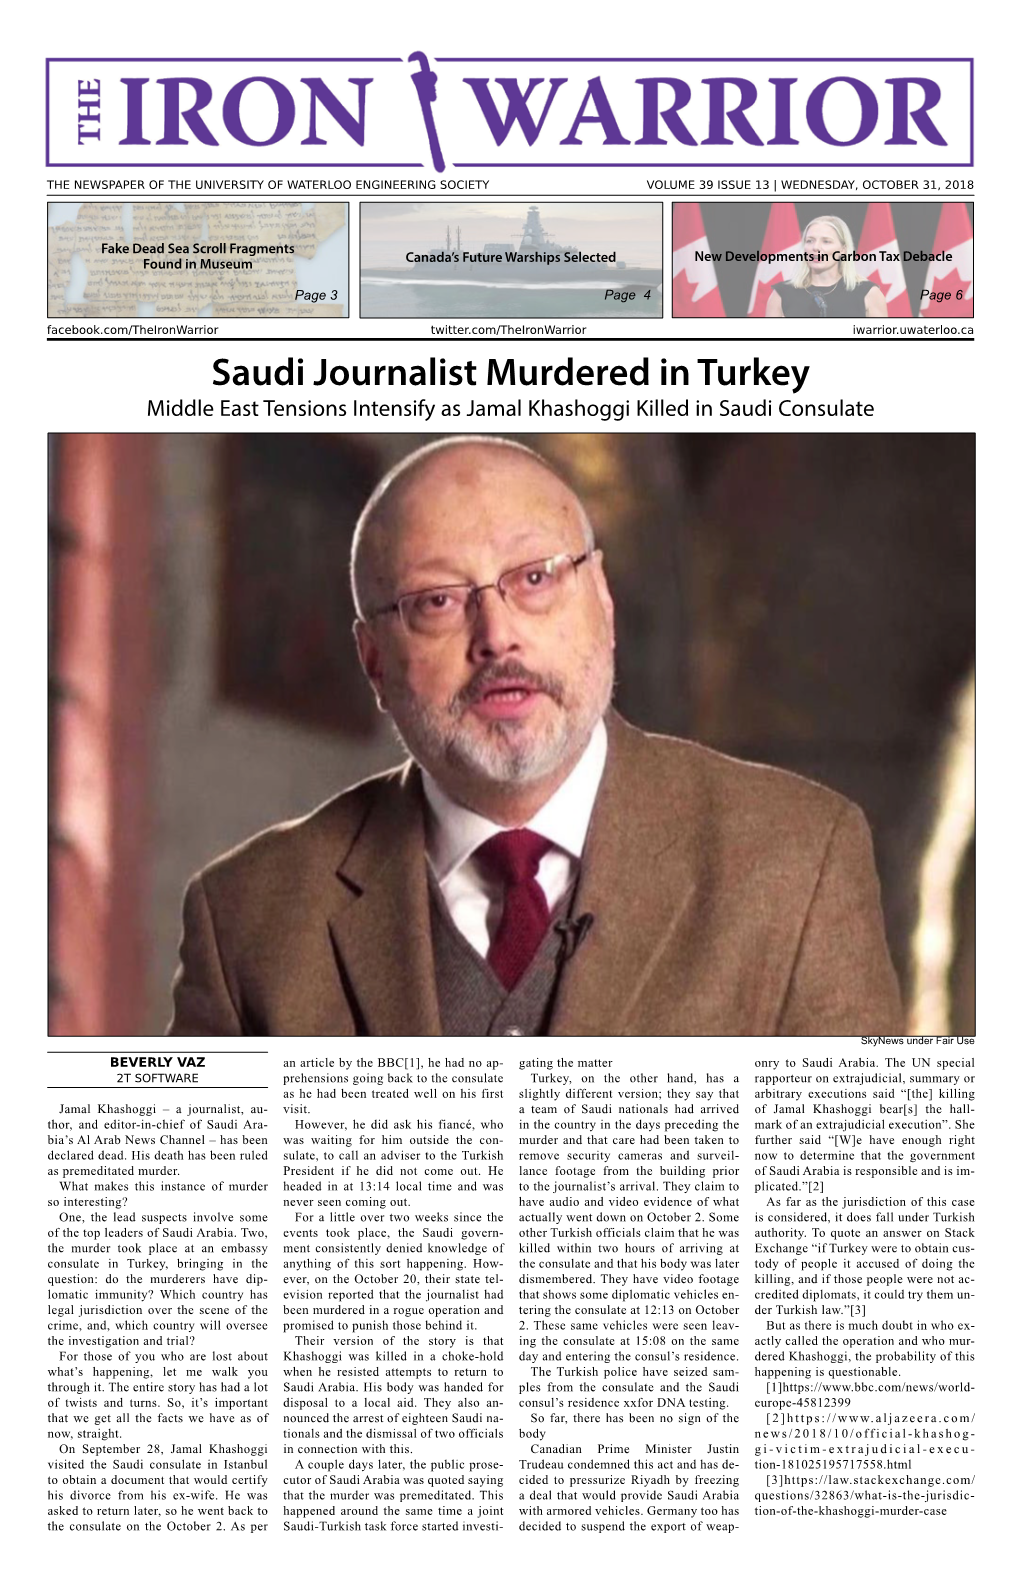 Saudi Journalist Murdered in Turkey Middle East Tensions Intensify As Jamal Khashoggi Killed in Saudi Consulate